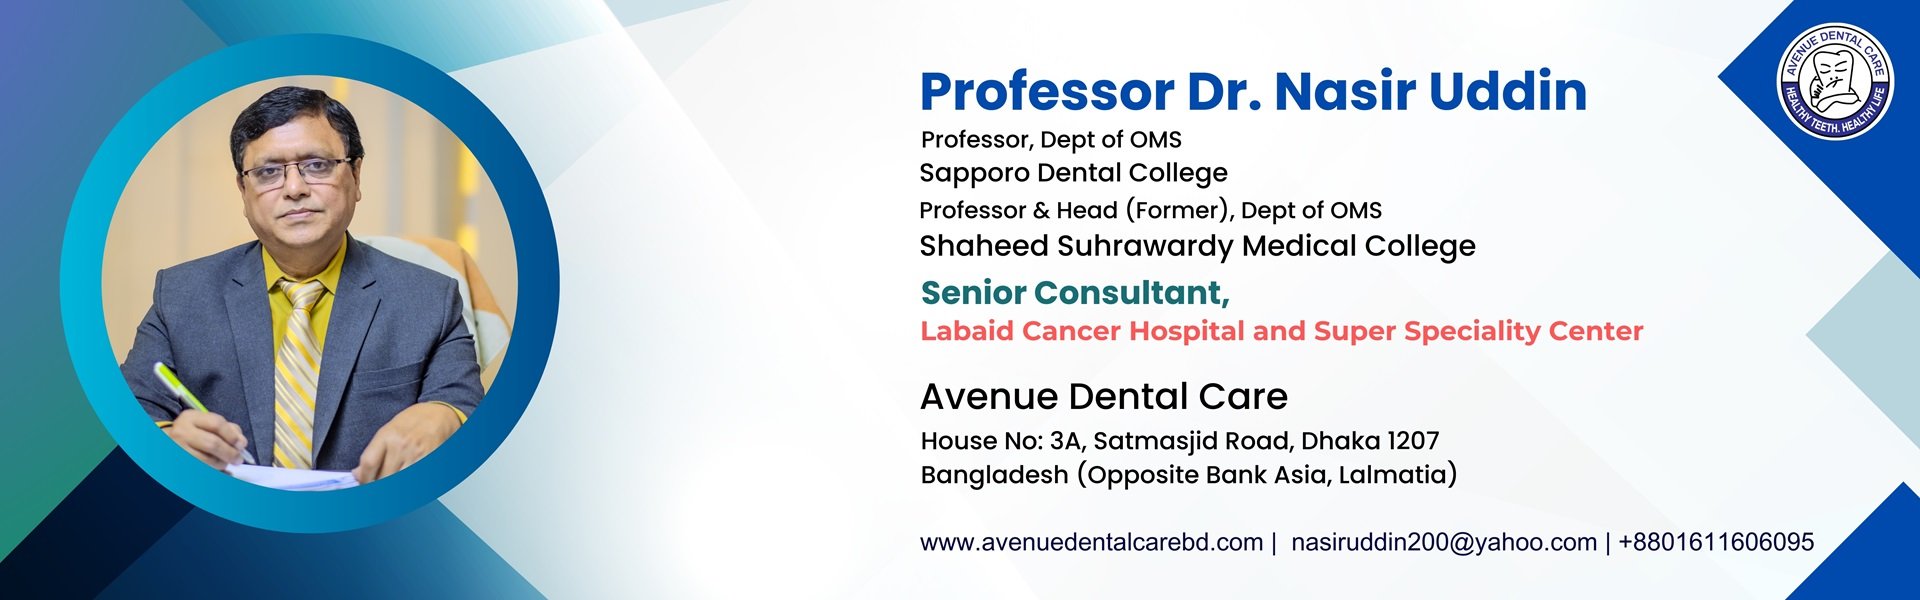 Prof. Dr. Nasir Uddin Deskstop 6